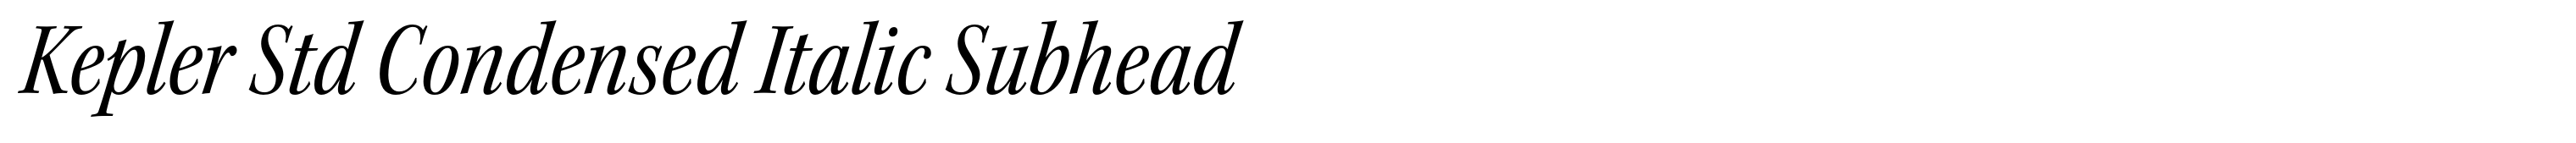 Kepler Std Condensed Italic Subhead